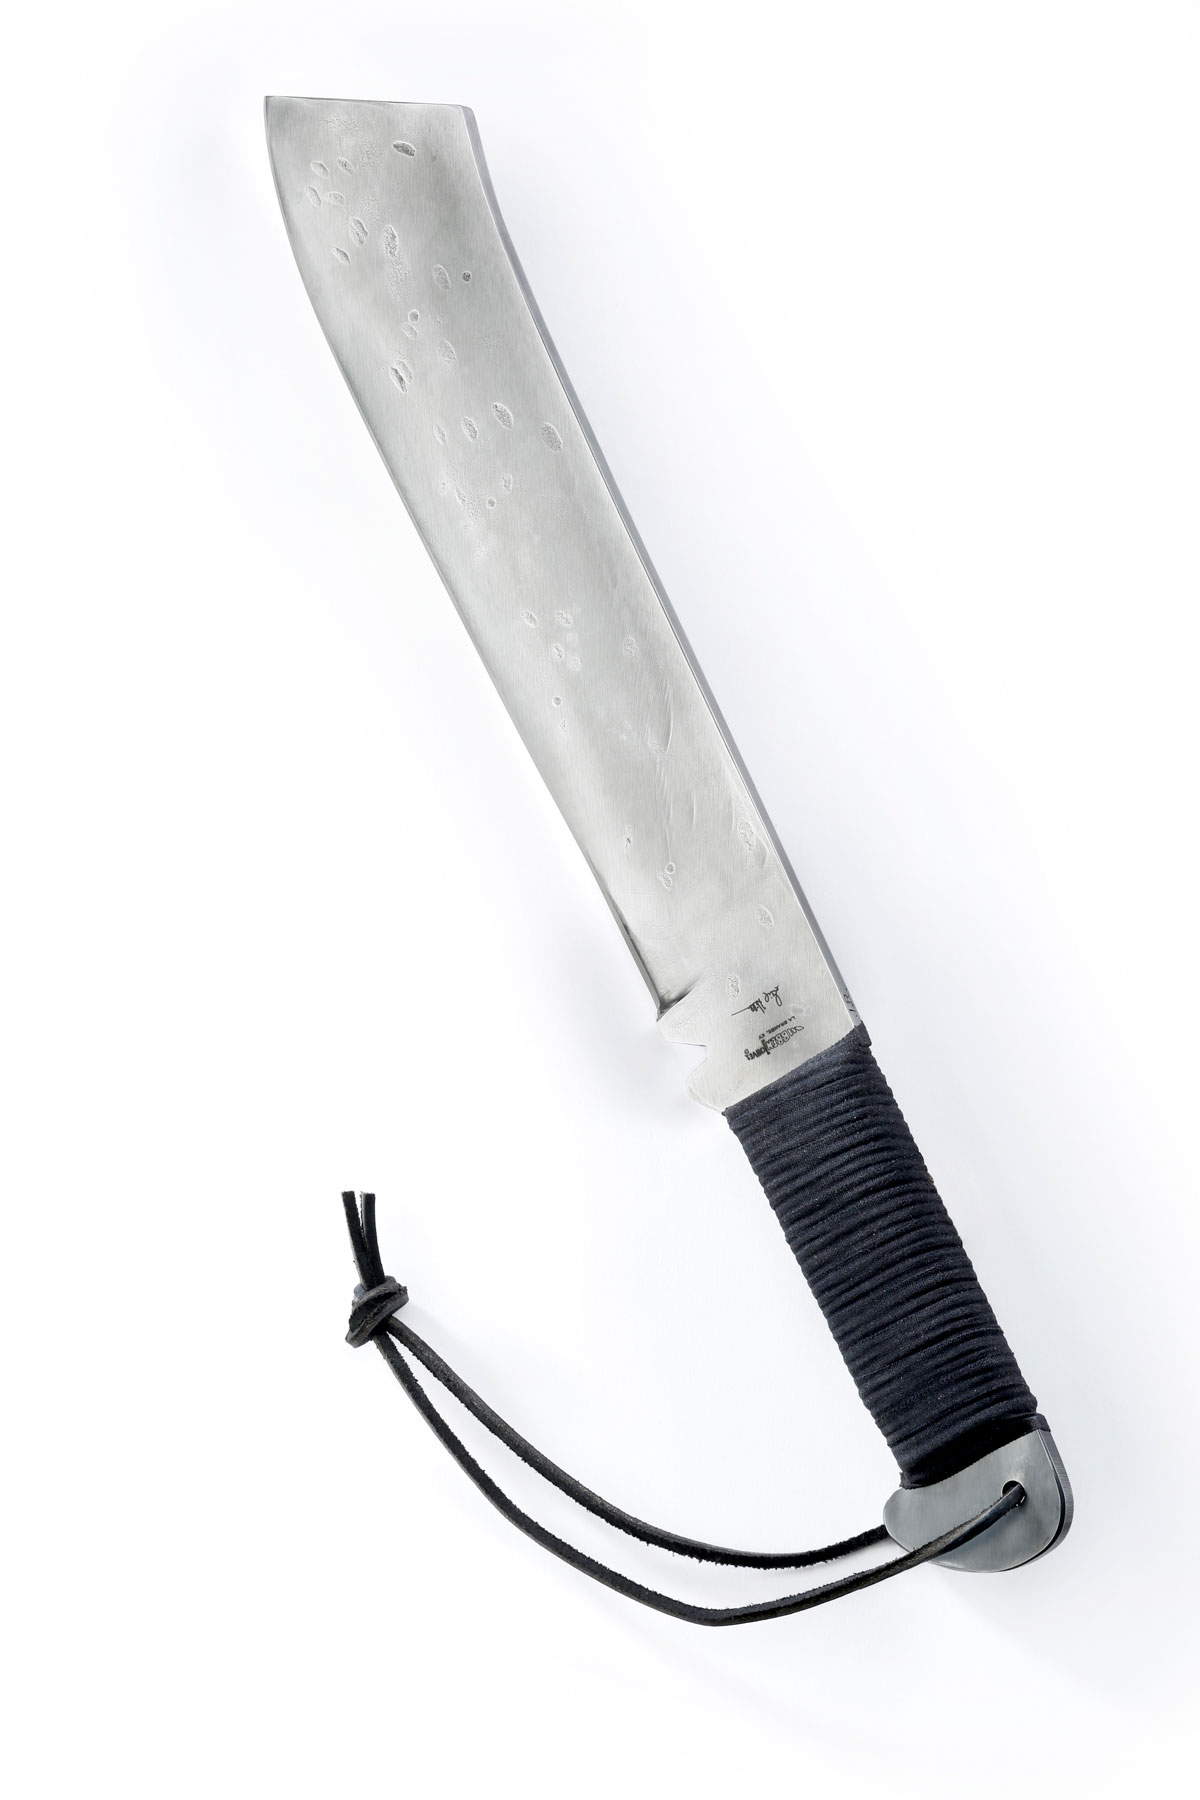 http://blademag.com/wp-content/uploads/Rambo-IV-knife.jpg